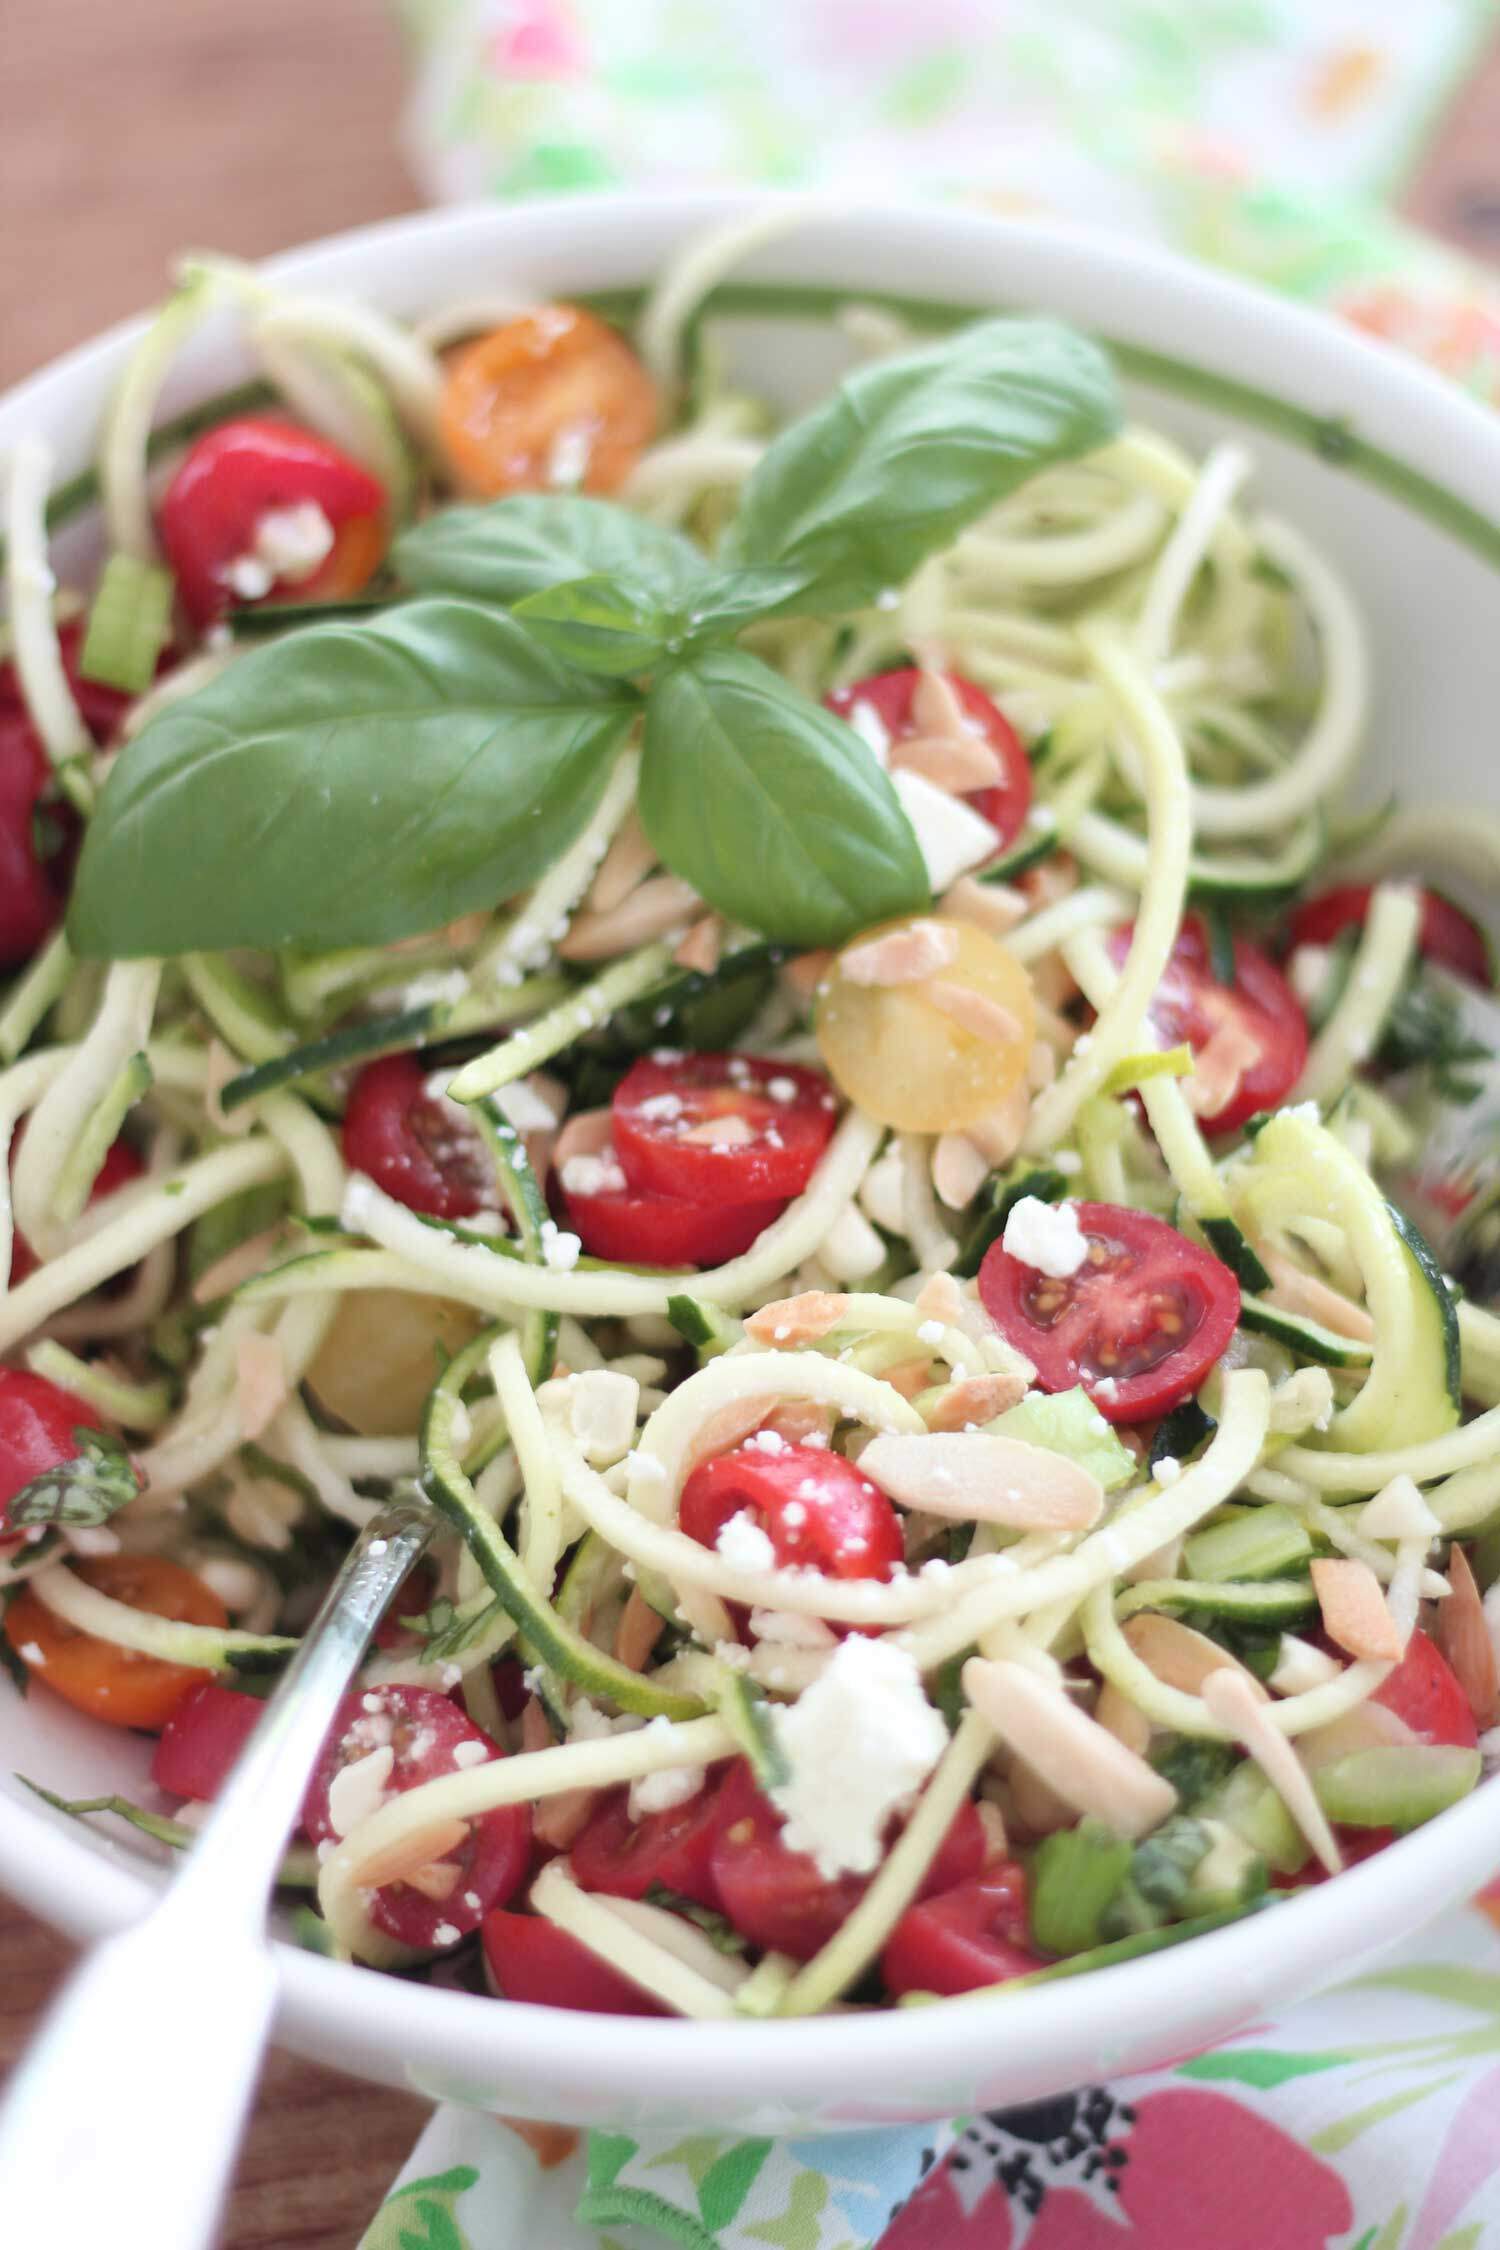 Need a salad idea? Make this fresh, crispy Zucchini Noodle salad with your favorite summer vegetables and lemon vinaigrette.